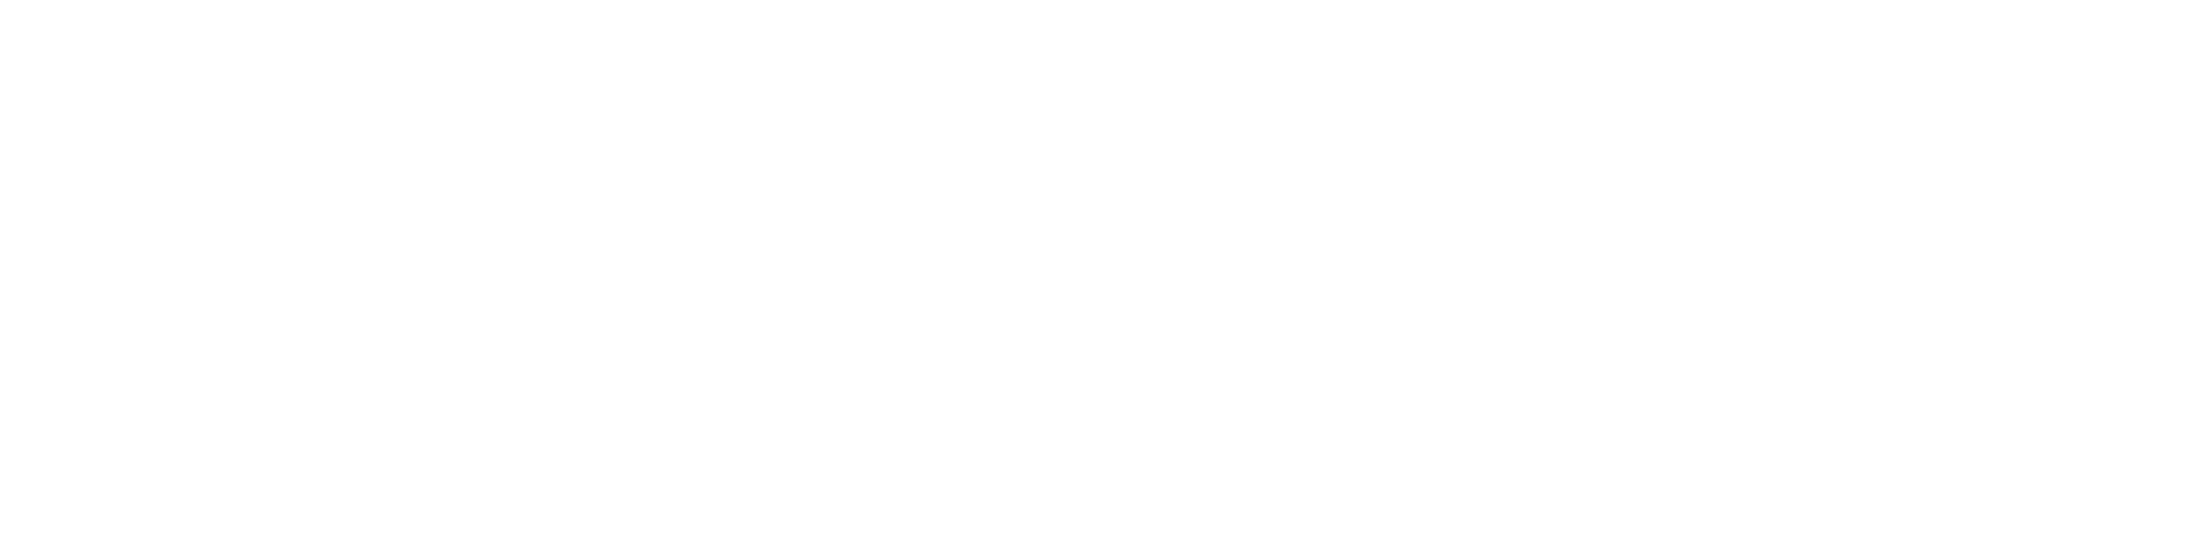 Easy Transfers